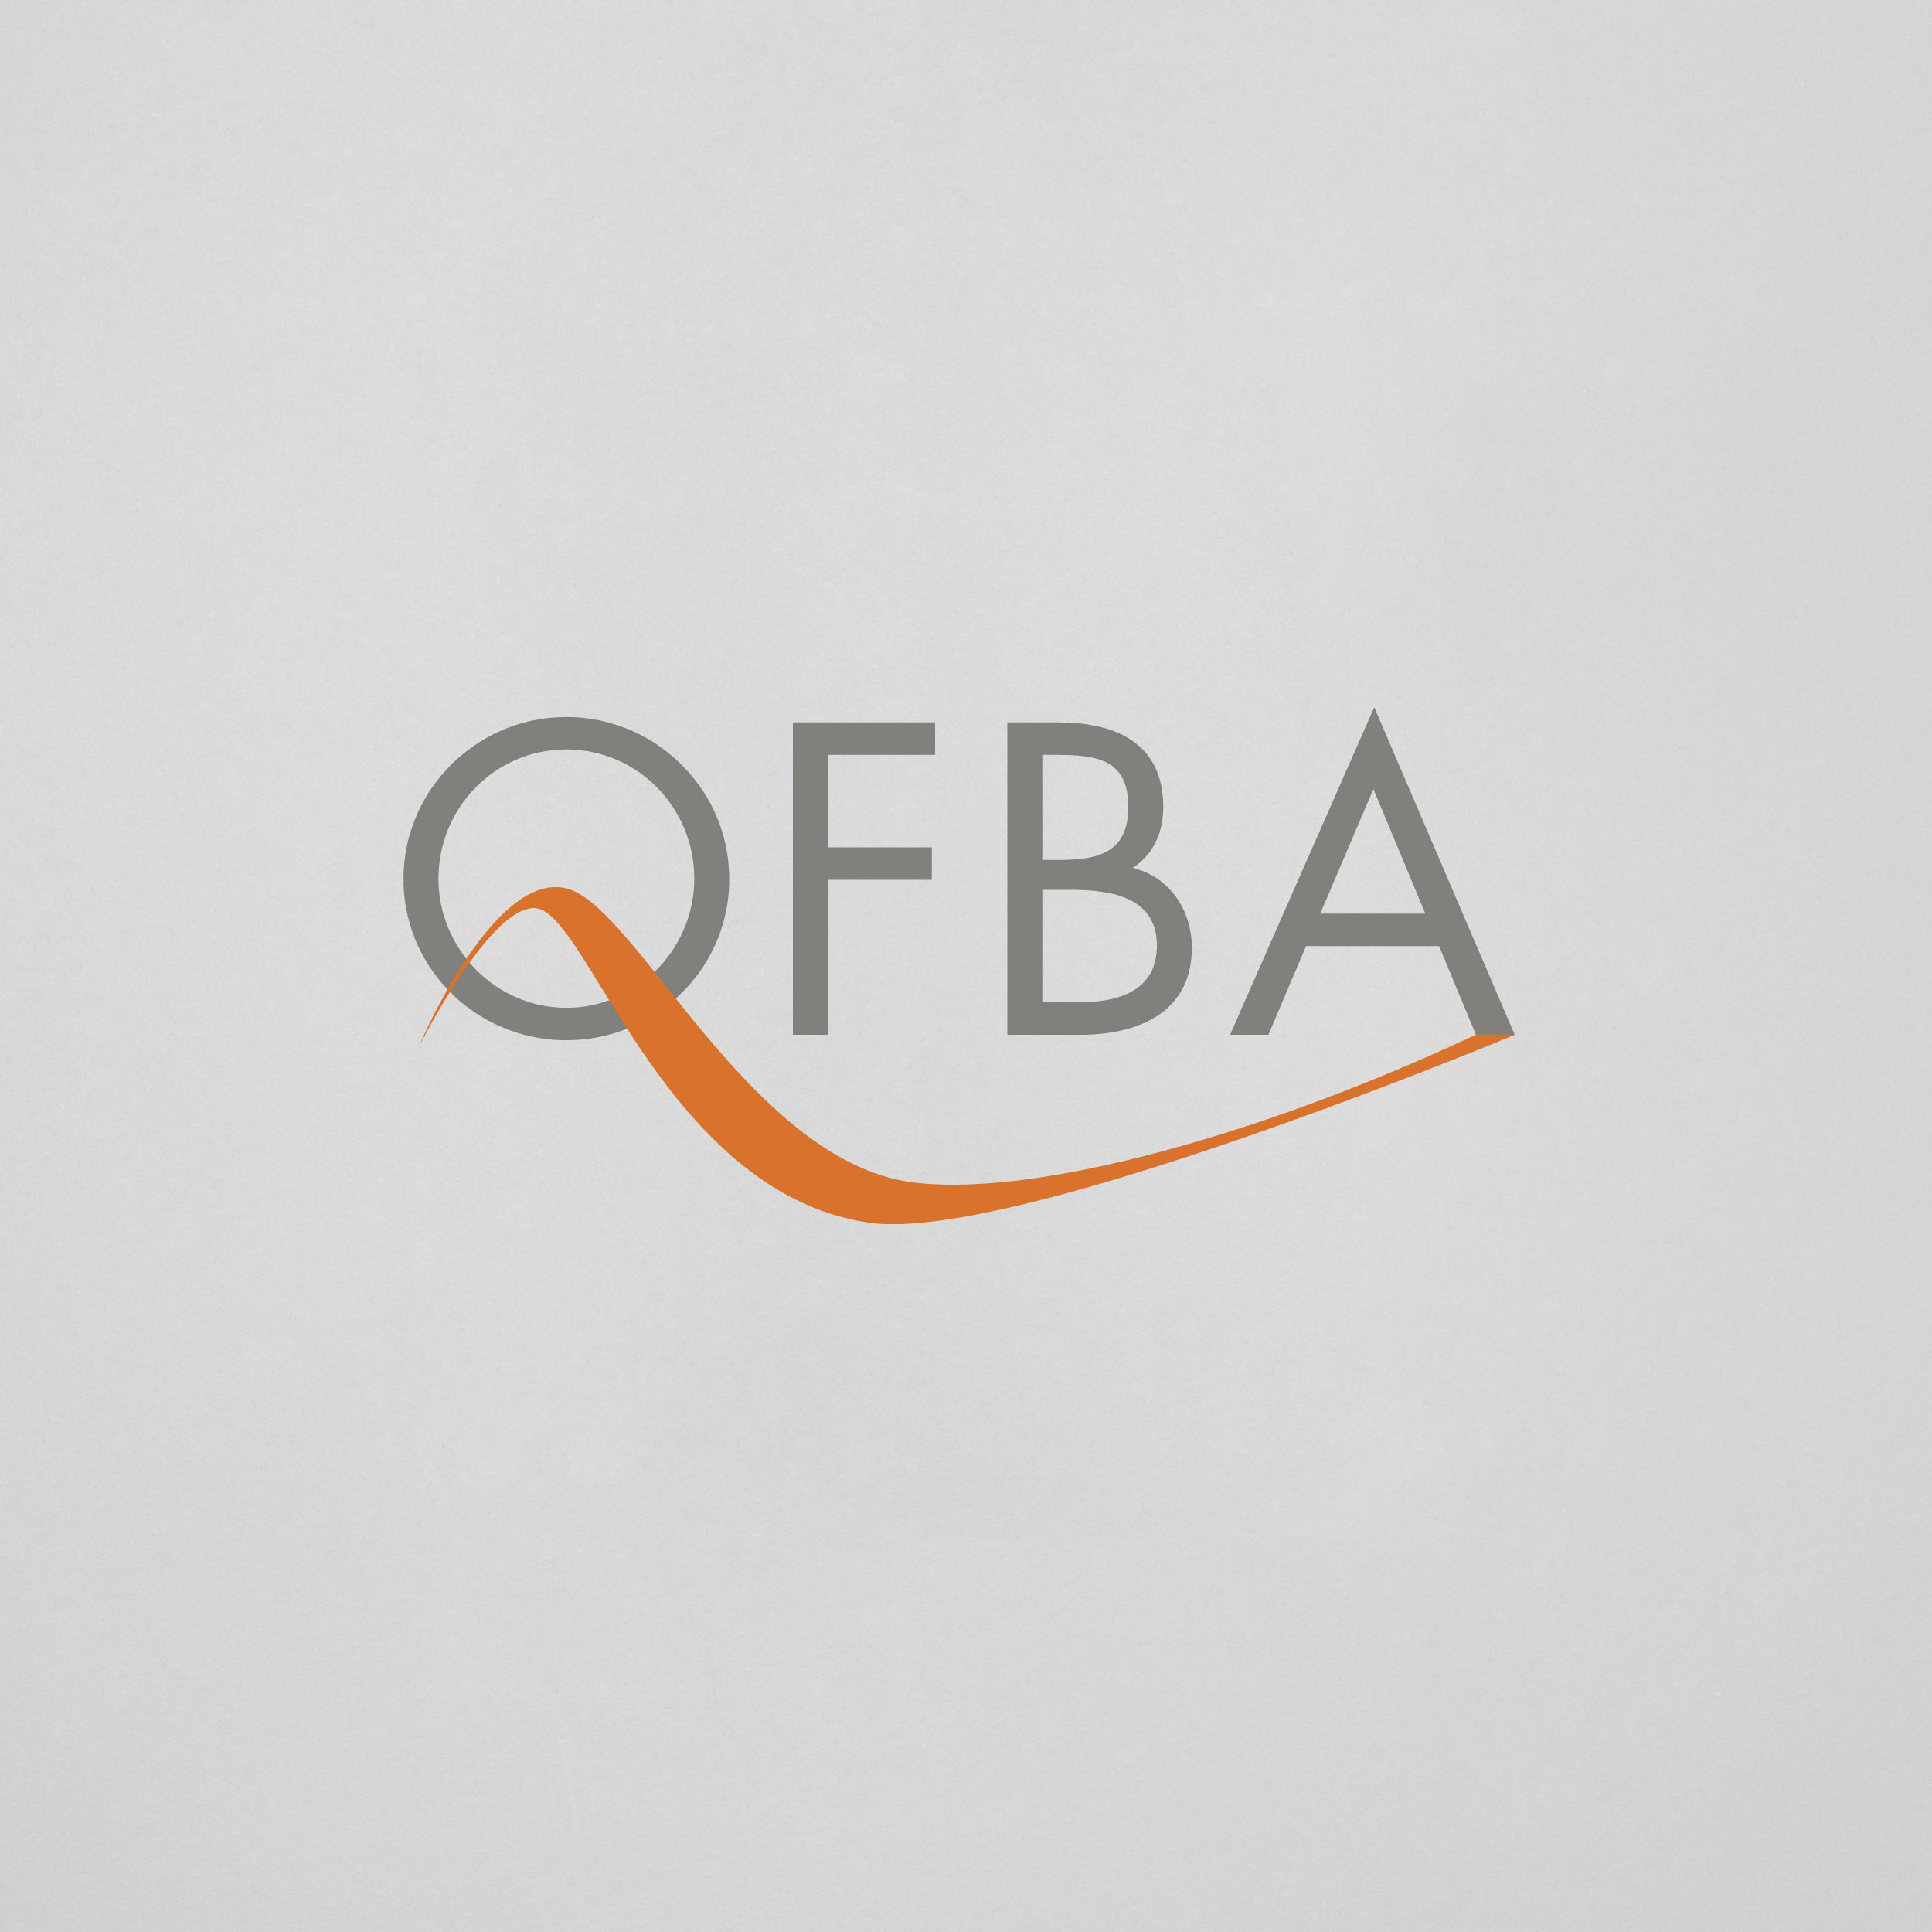 QFBA.logo.jpg